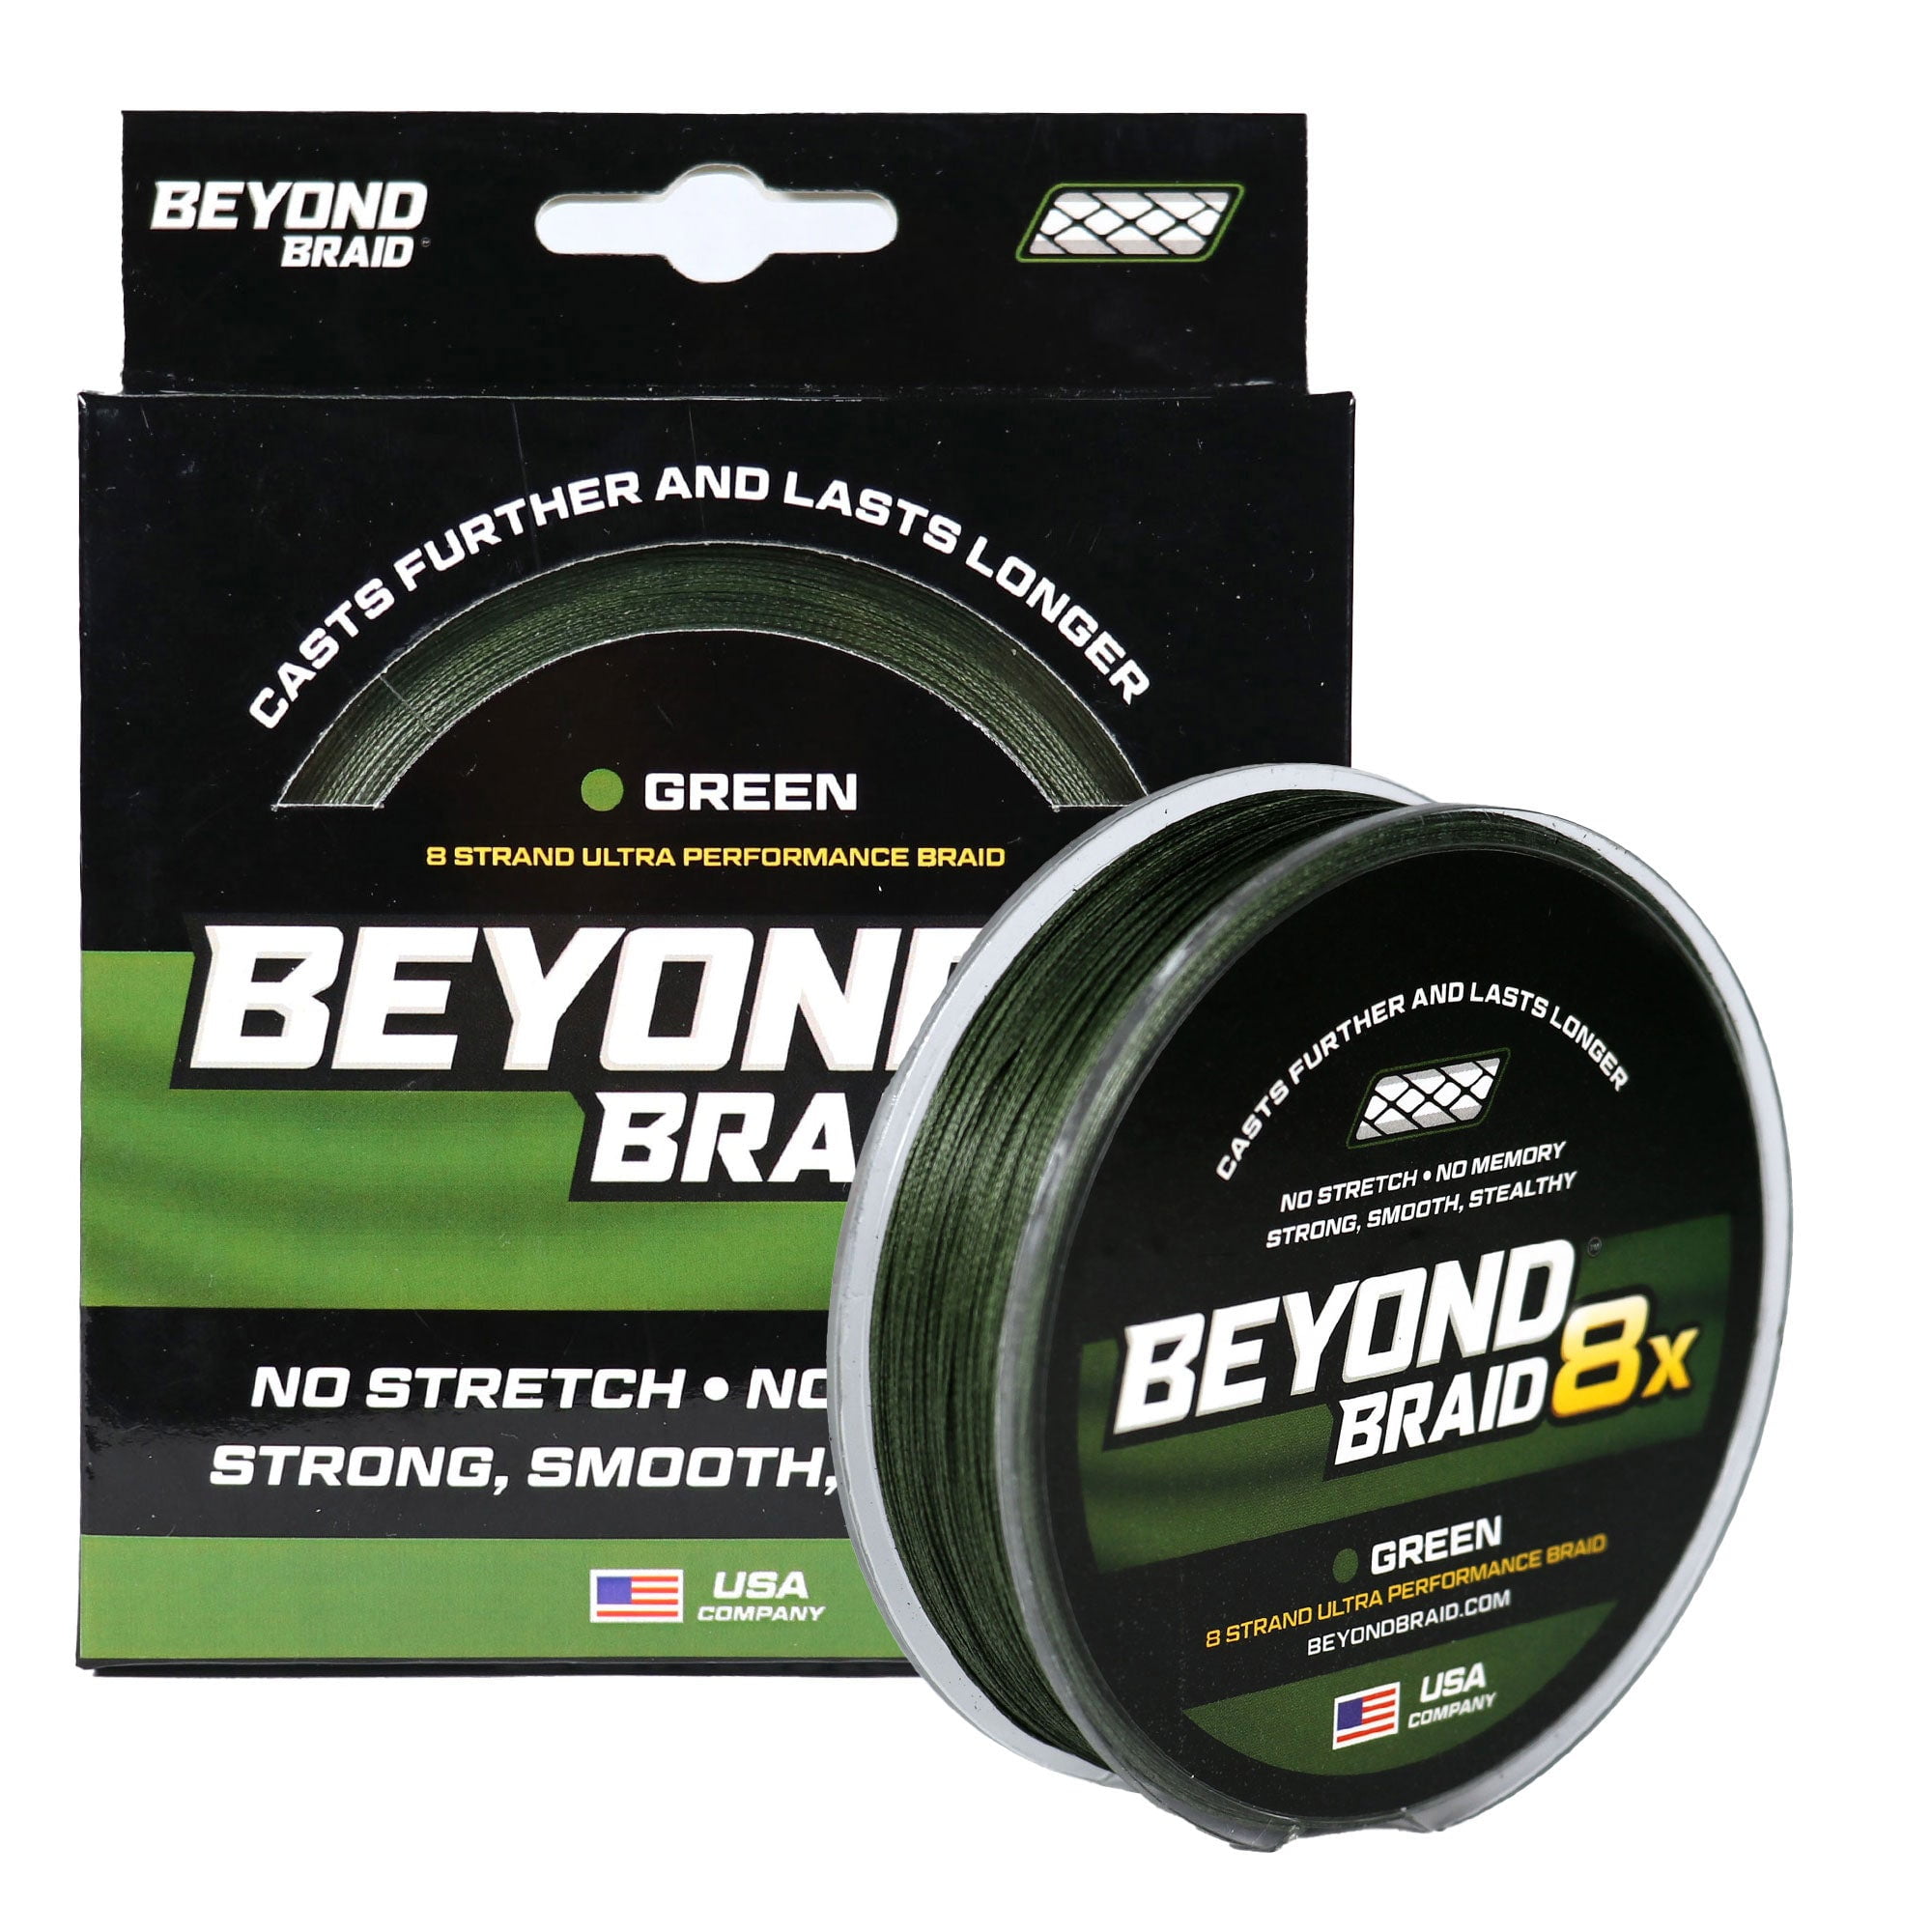 Beyond Braid Braided Fishing Line - Abrasion Resistant - No Stretch